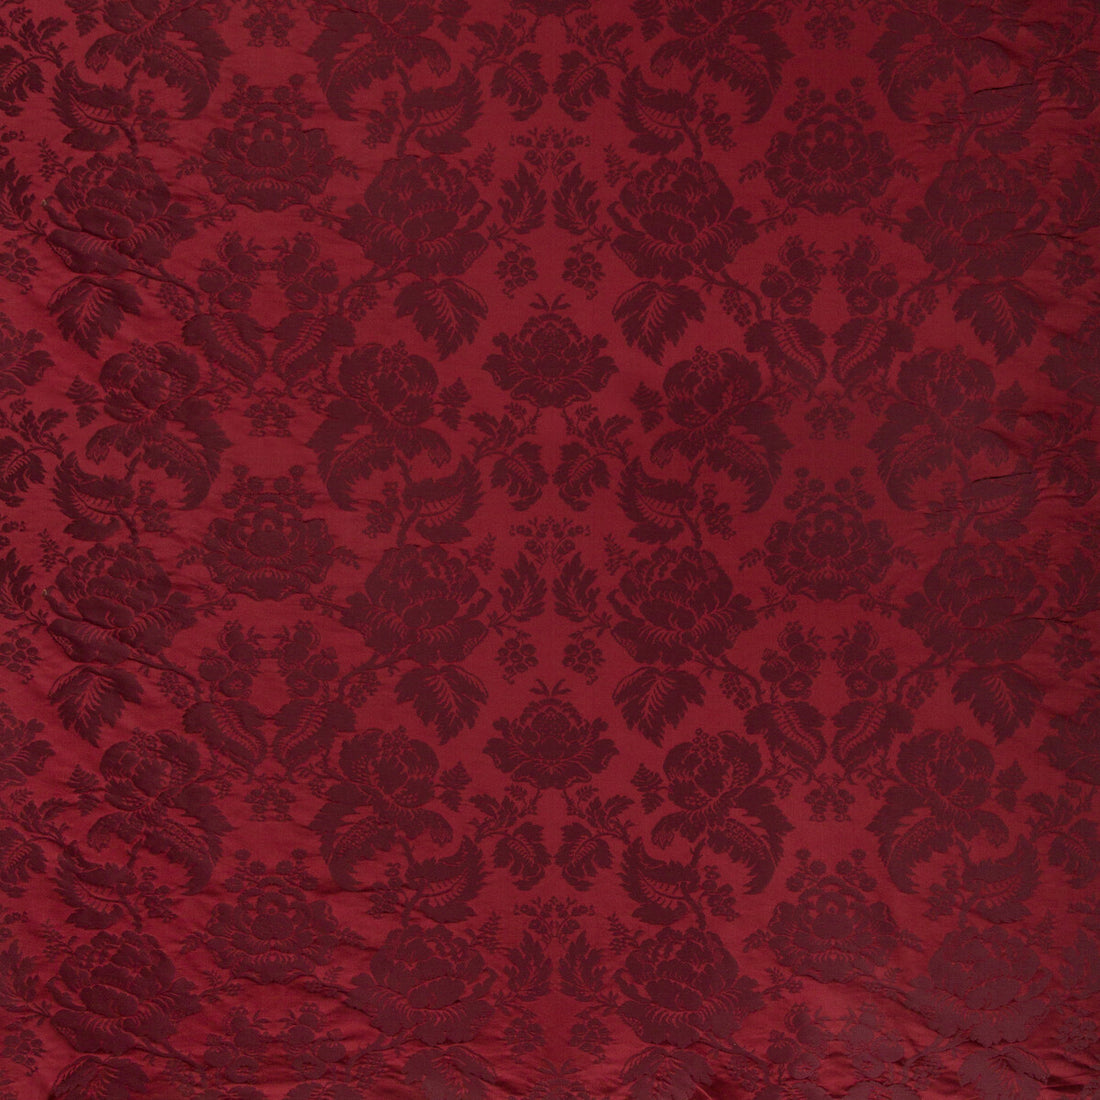 Moulins Damask fabric in grape color - pattern BR-81035.10.0 - by Brunschwig &amp; Fils